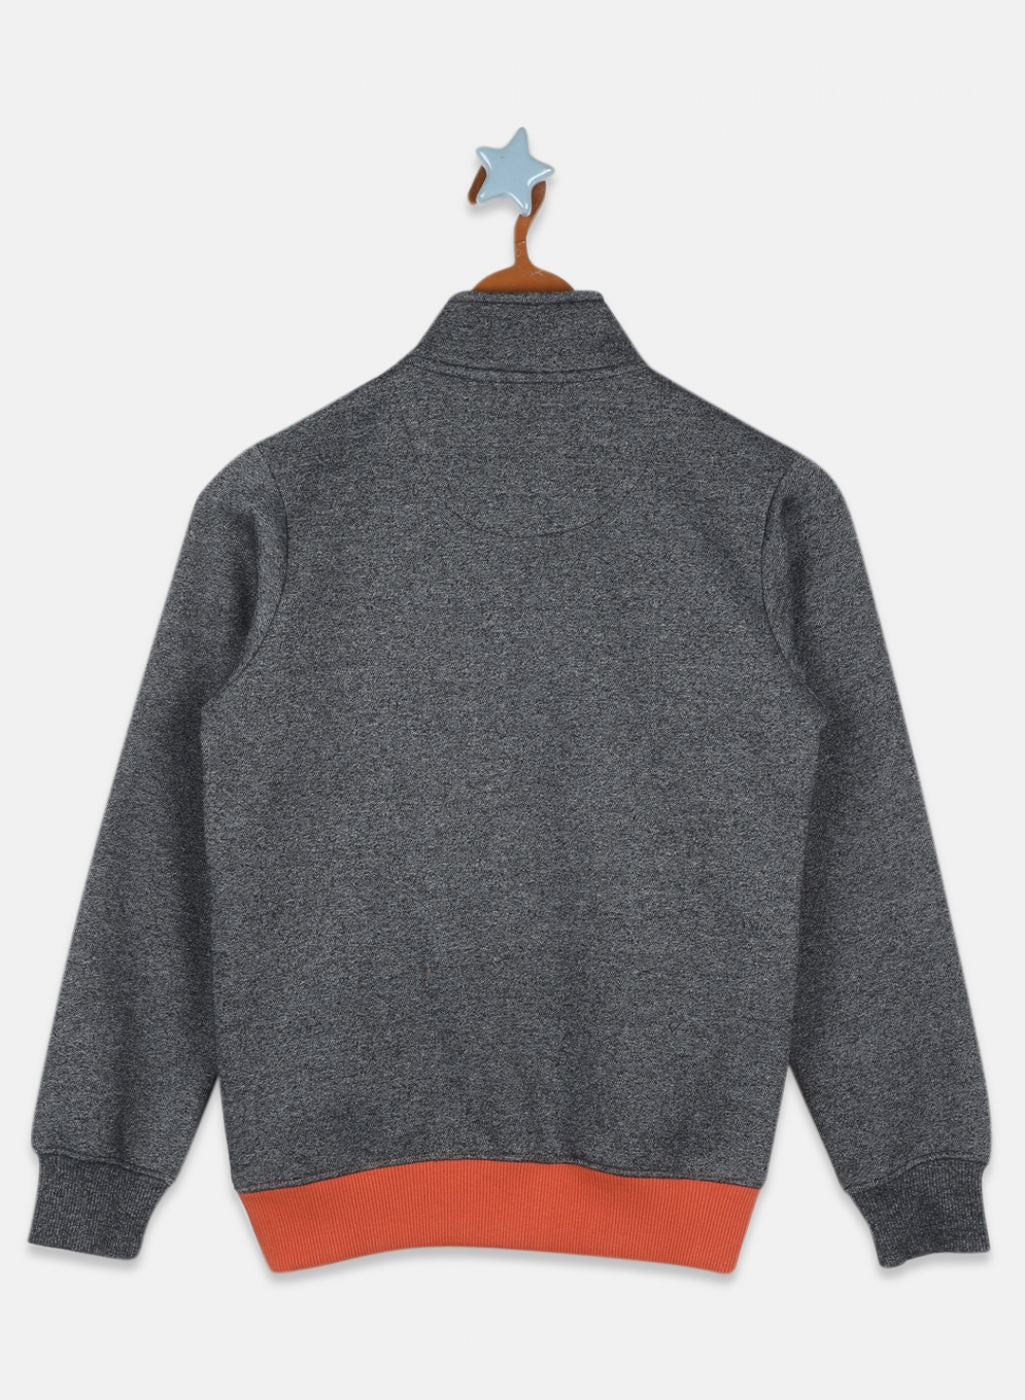 Boys Grey & Orange Printed Sweatshirt